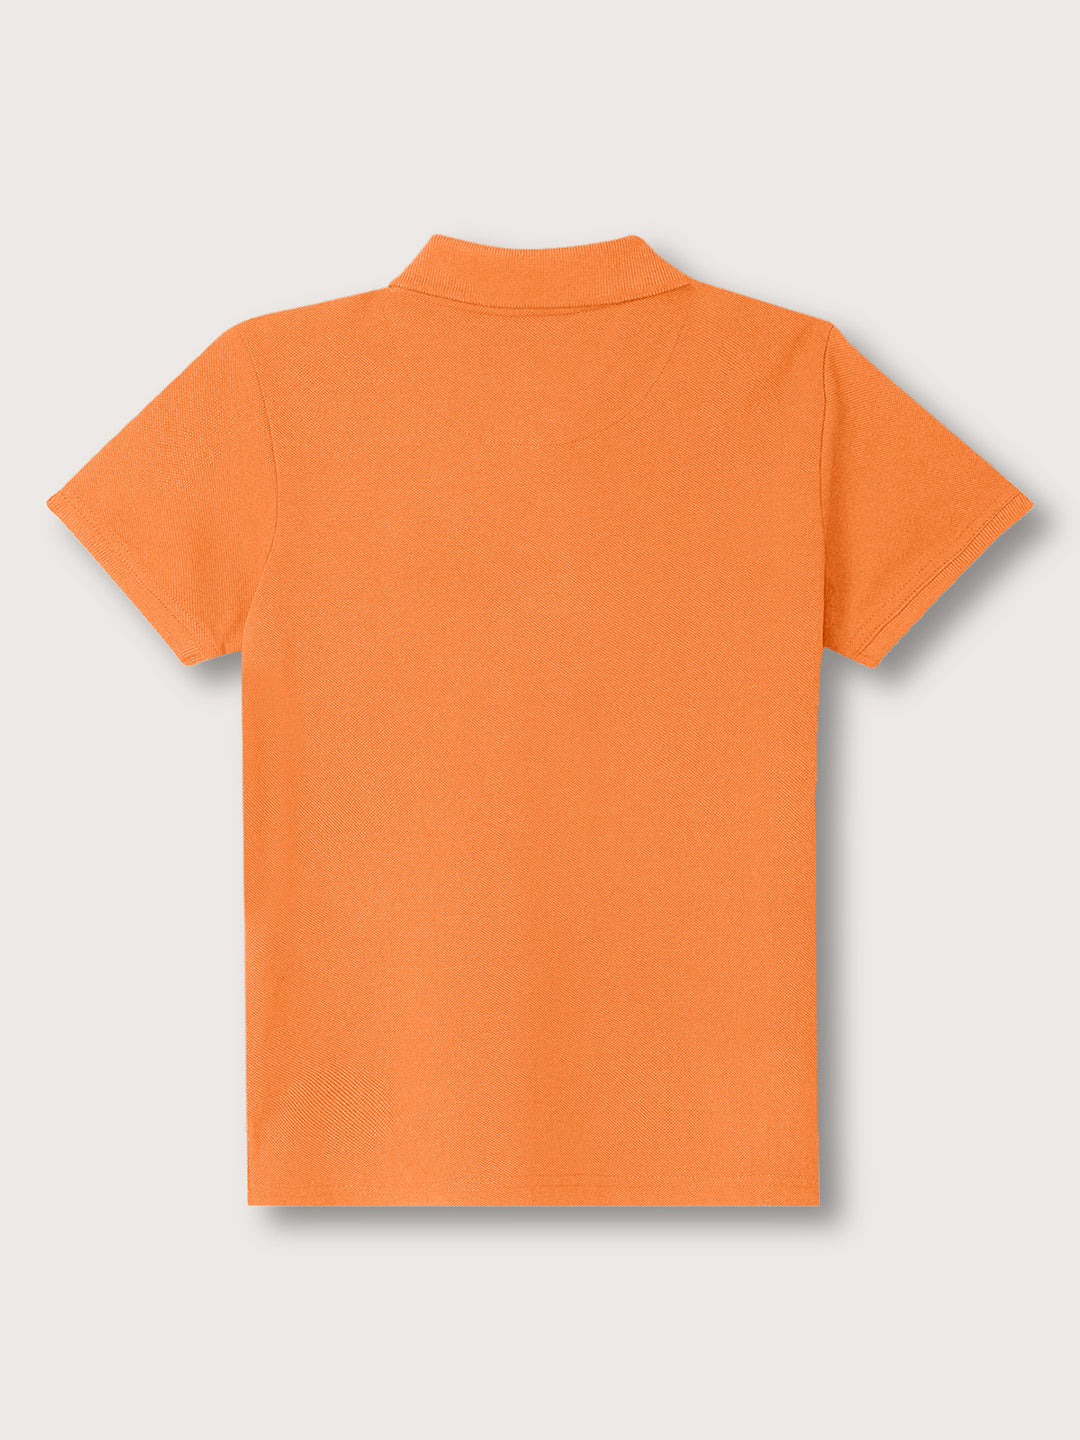 True Religion Kids Orange Regular Fit Polo T-Shirt